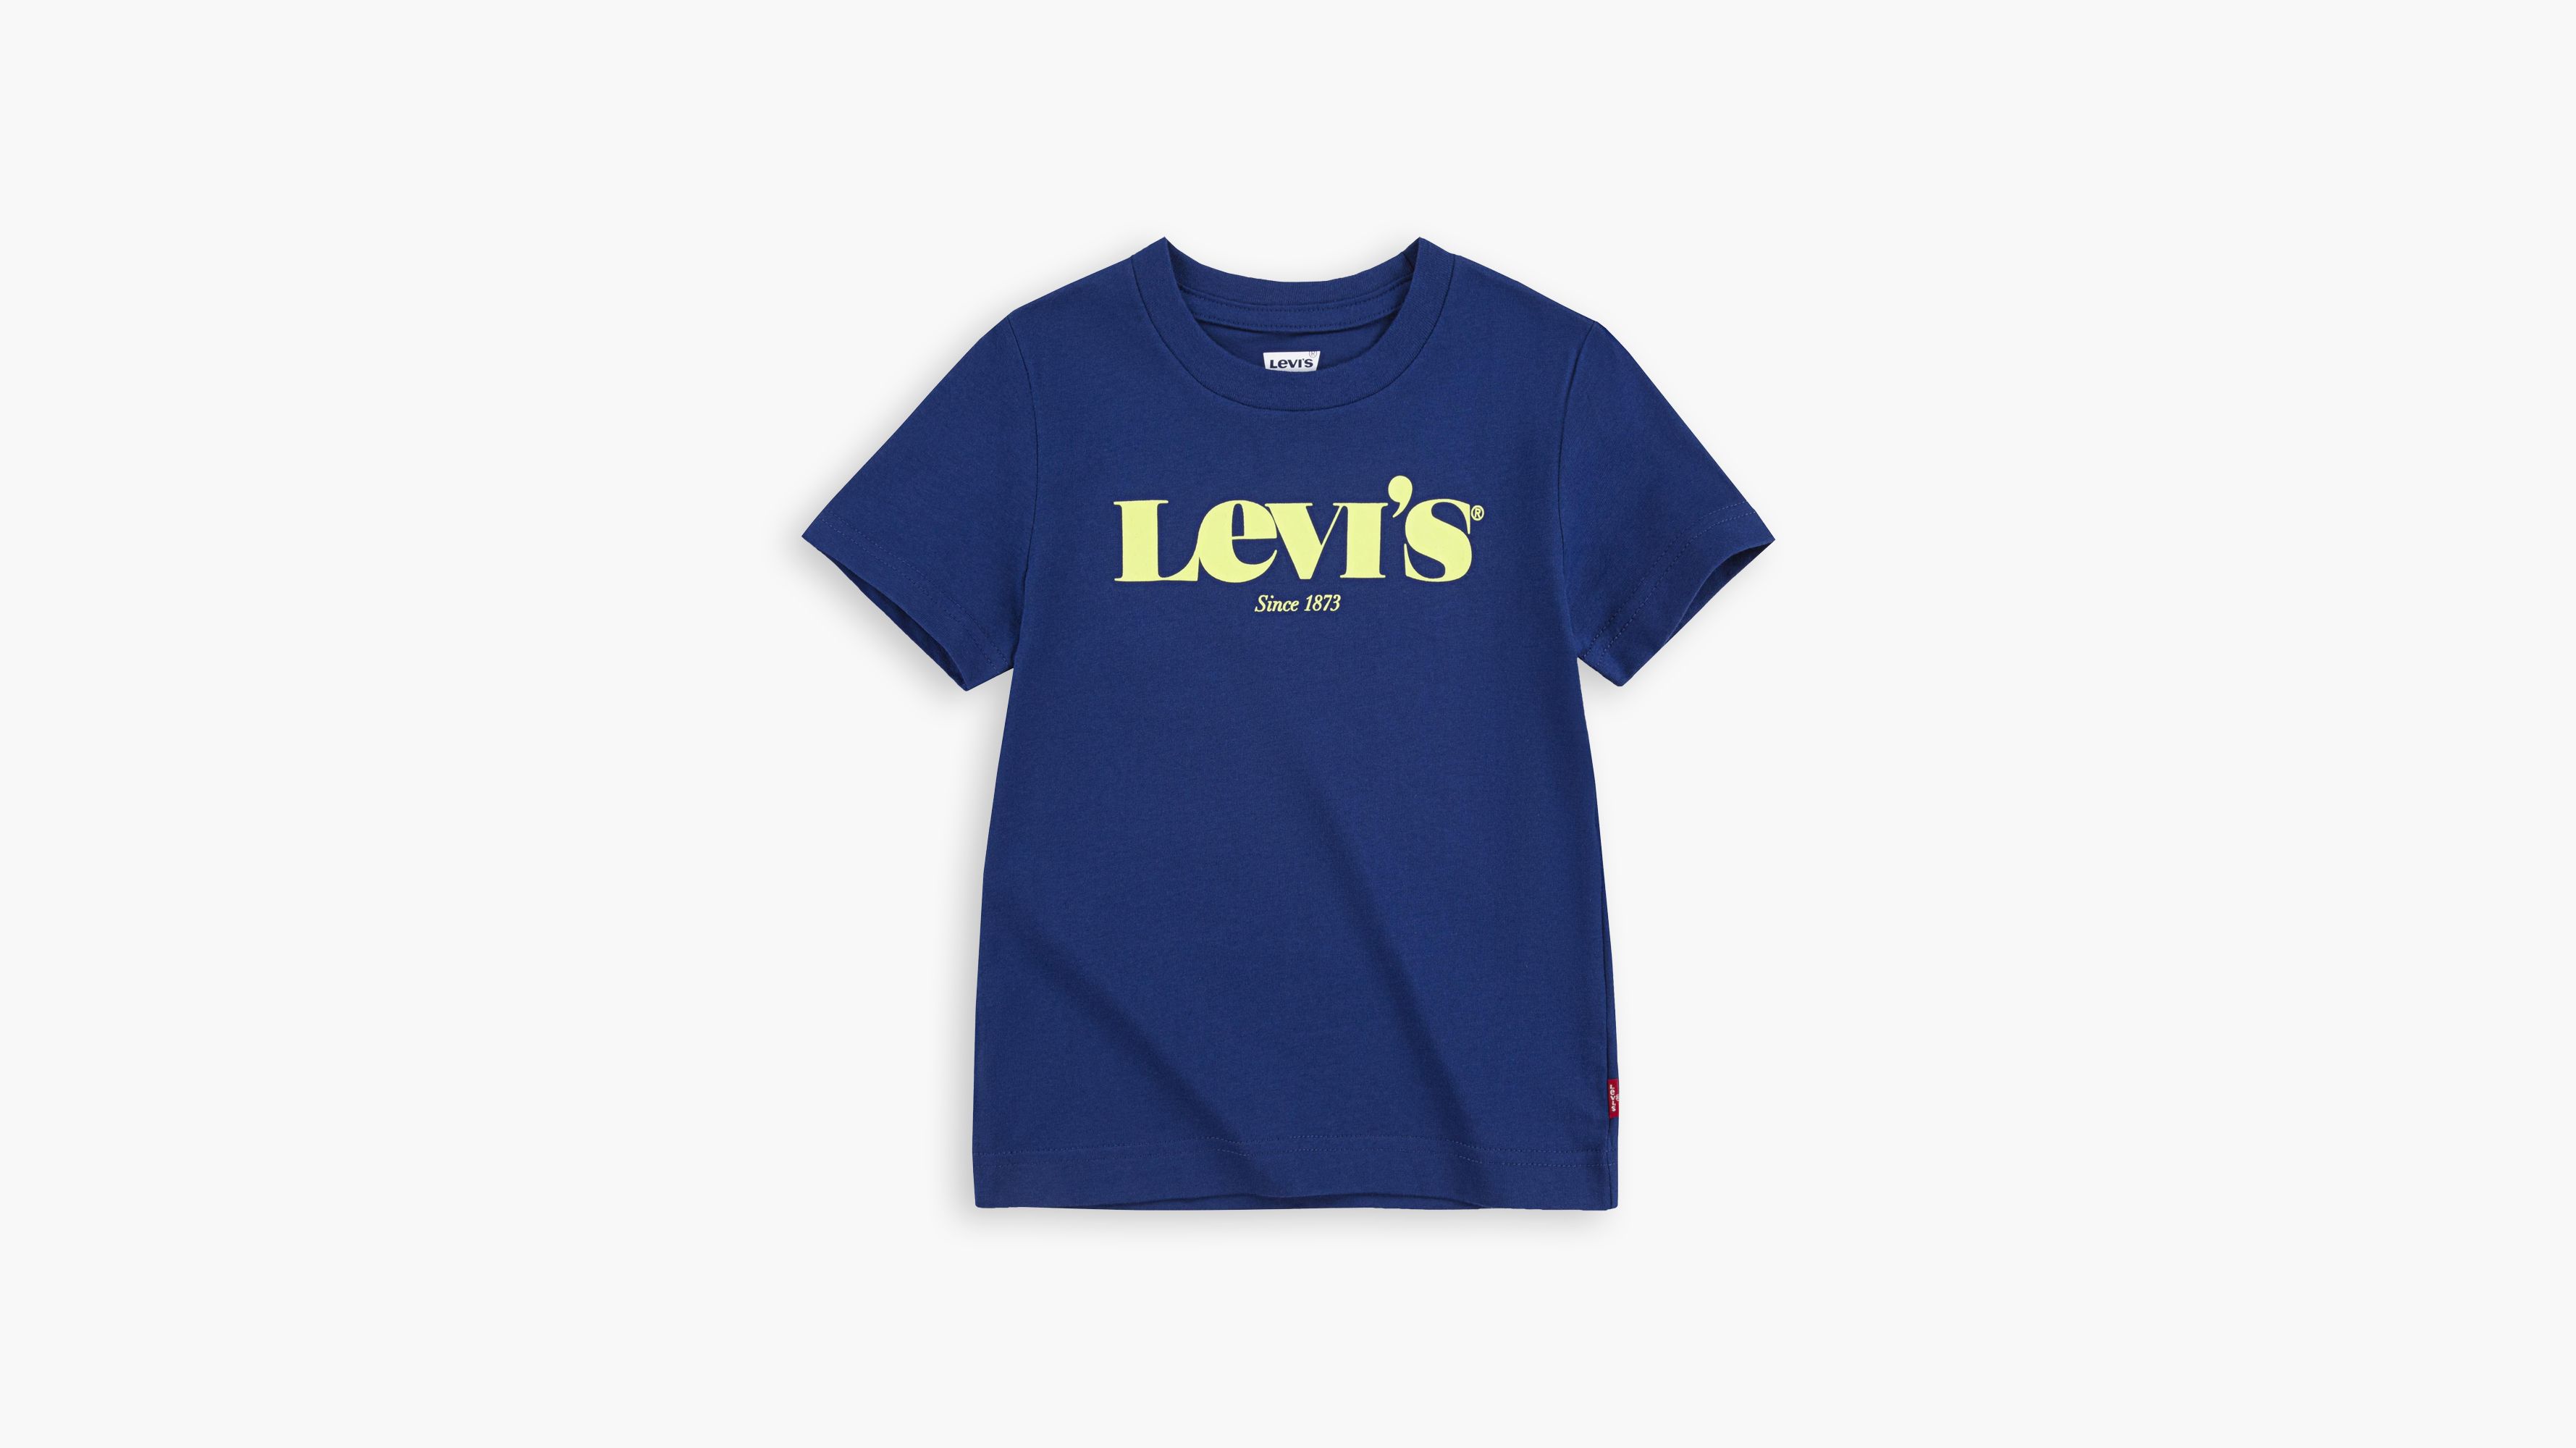 levis boys tops